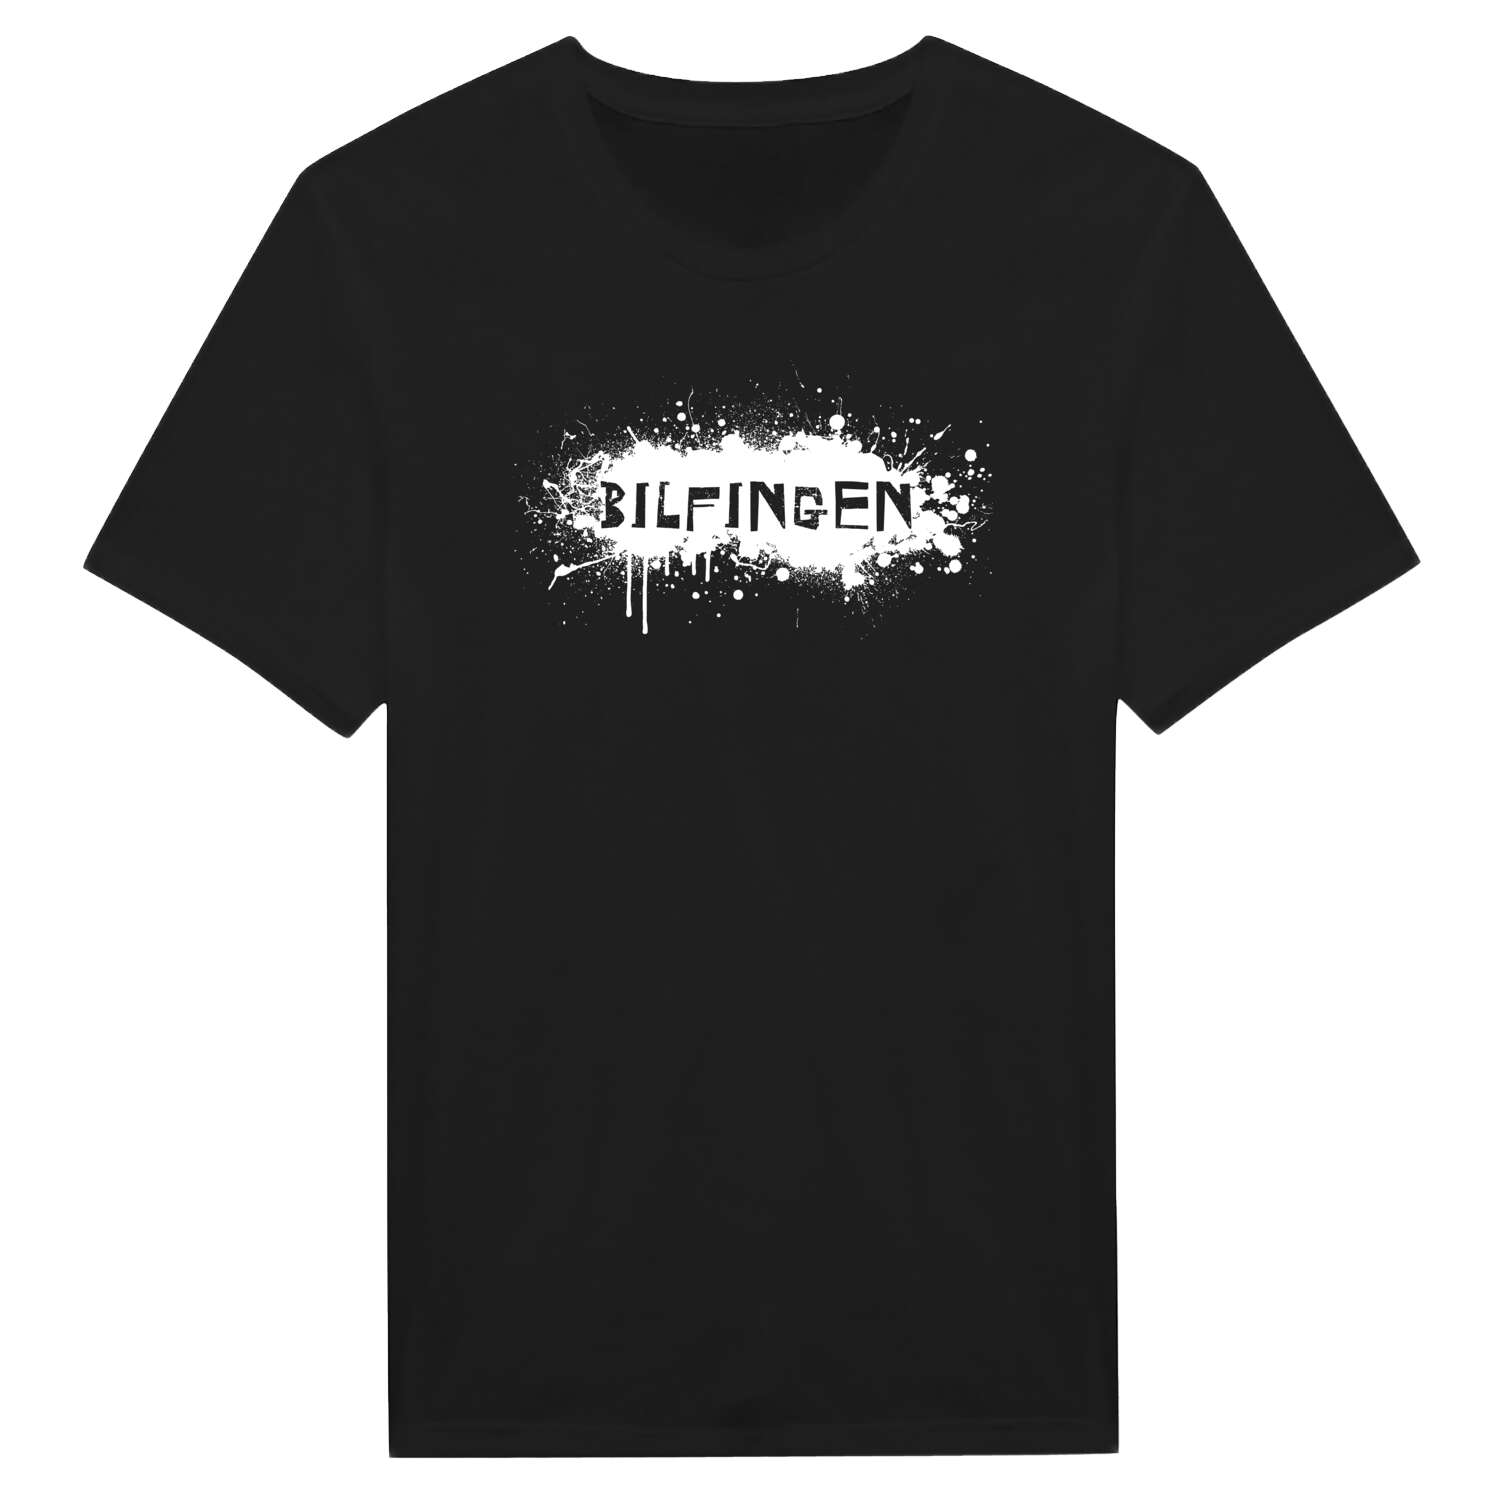 Bilfingen T-Shirt »Paint Splash Punk«